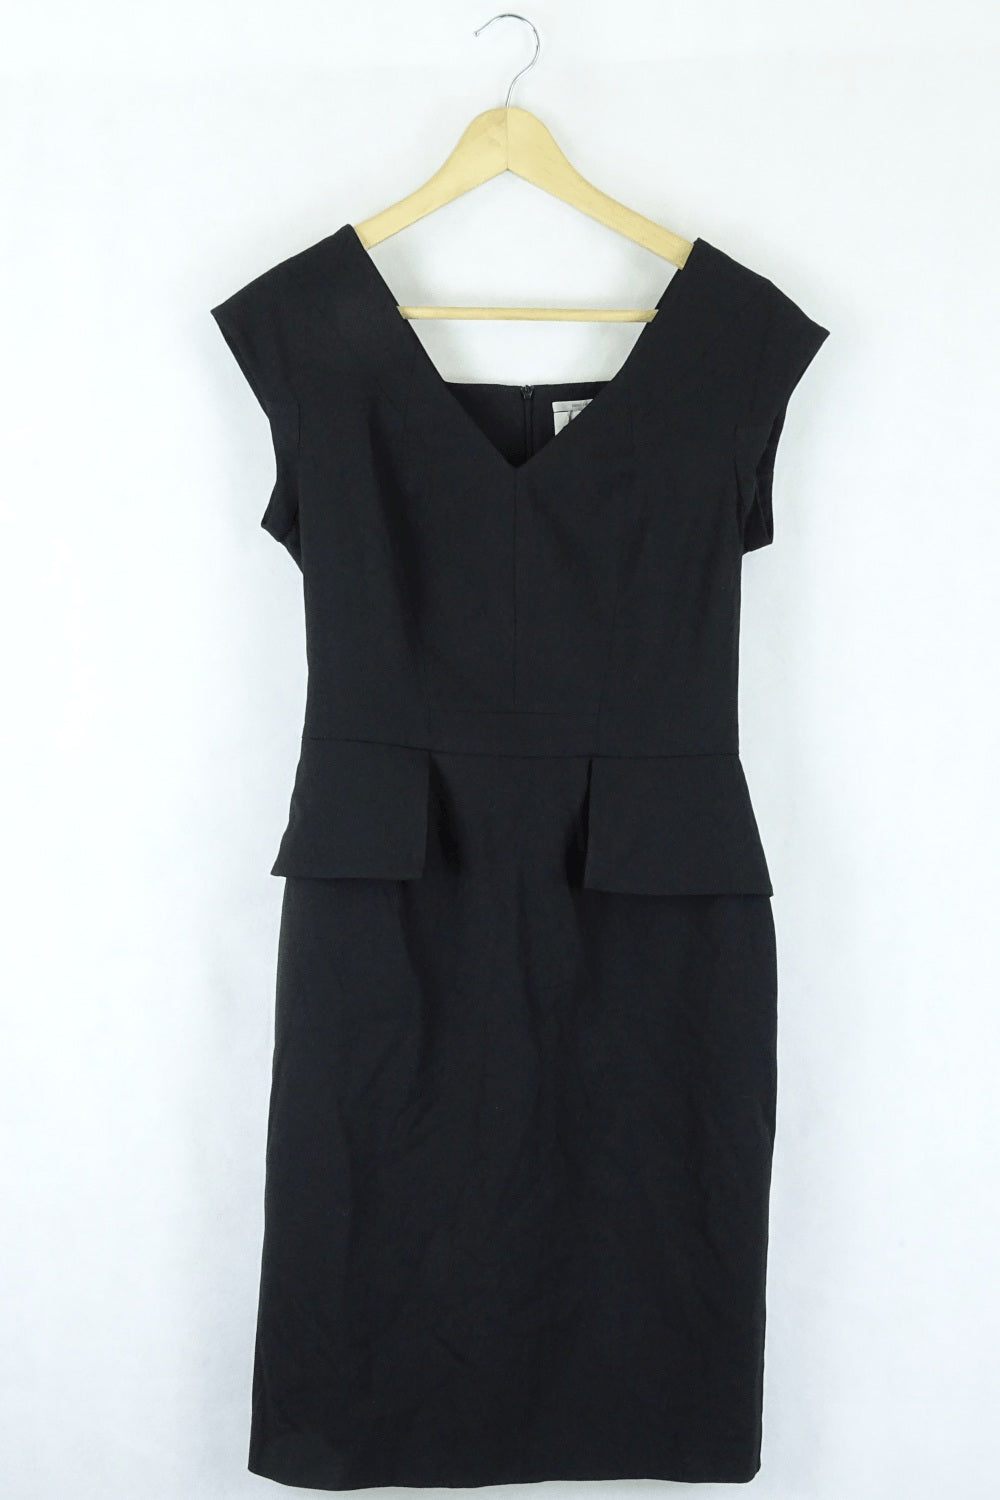 Veronika Maine Black Dress 8